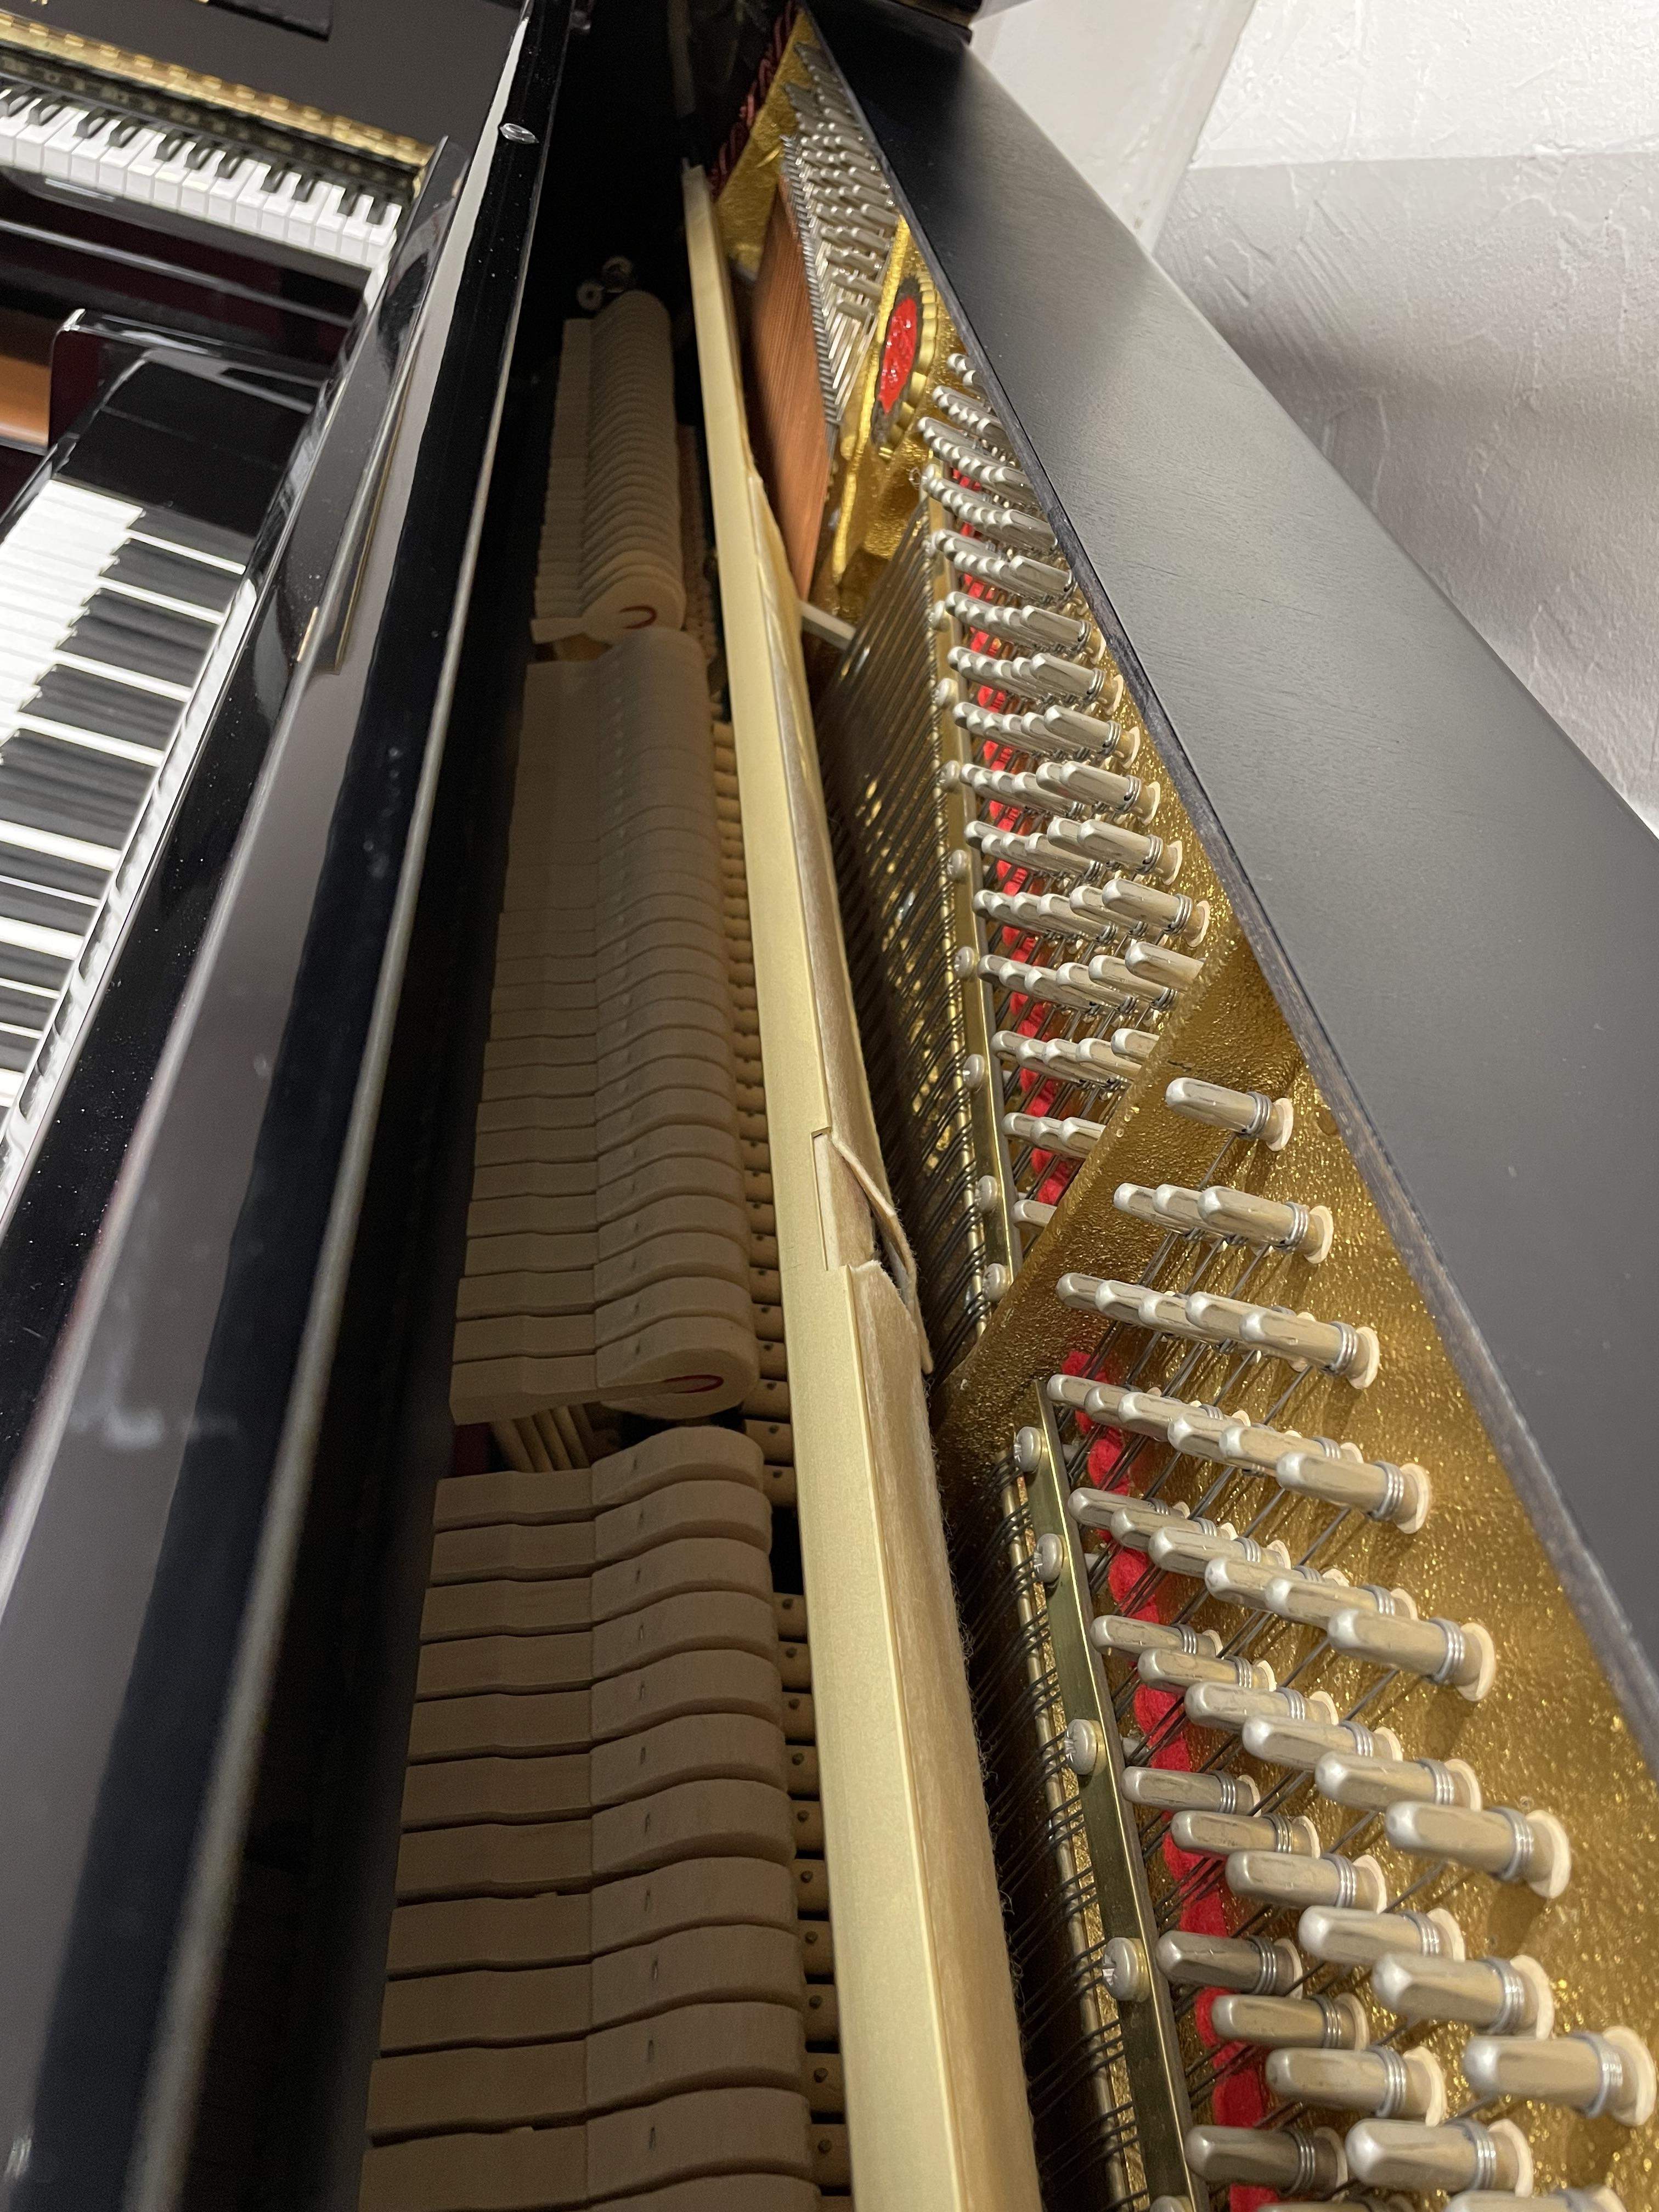 Piano droit Schimmel modèle 112 - Occasion - Pianorama